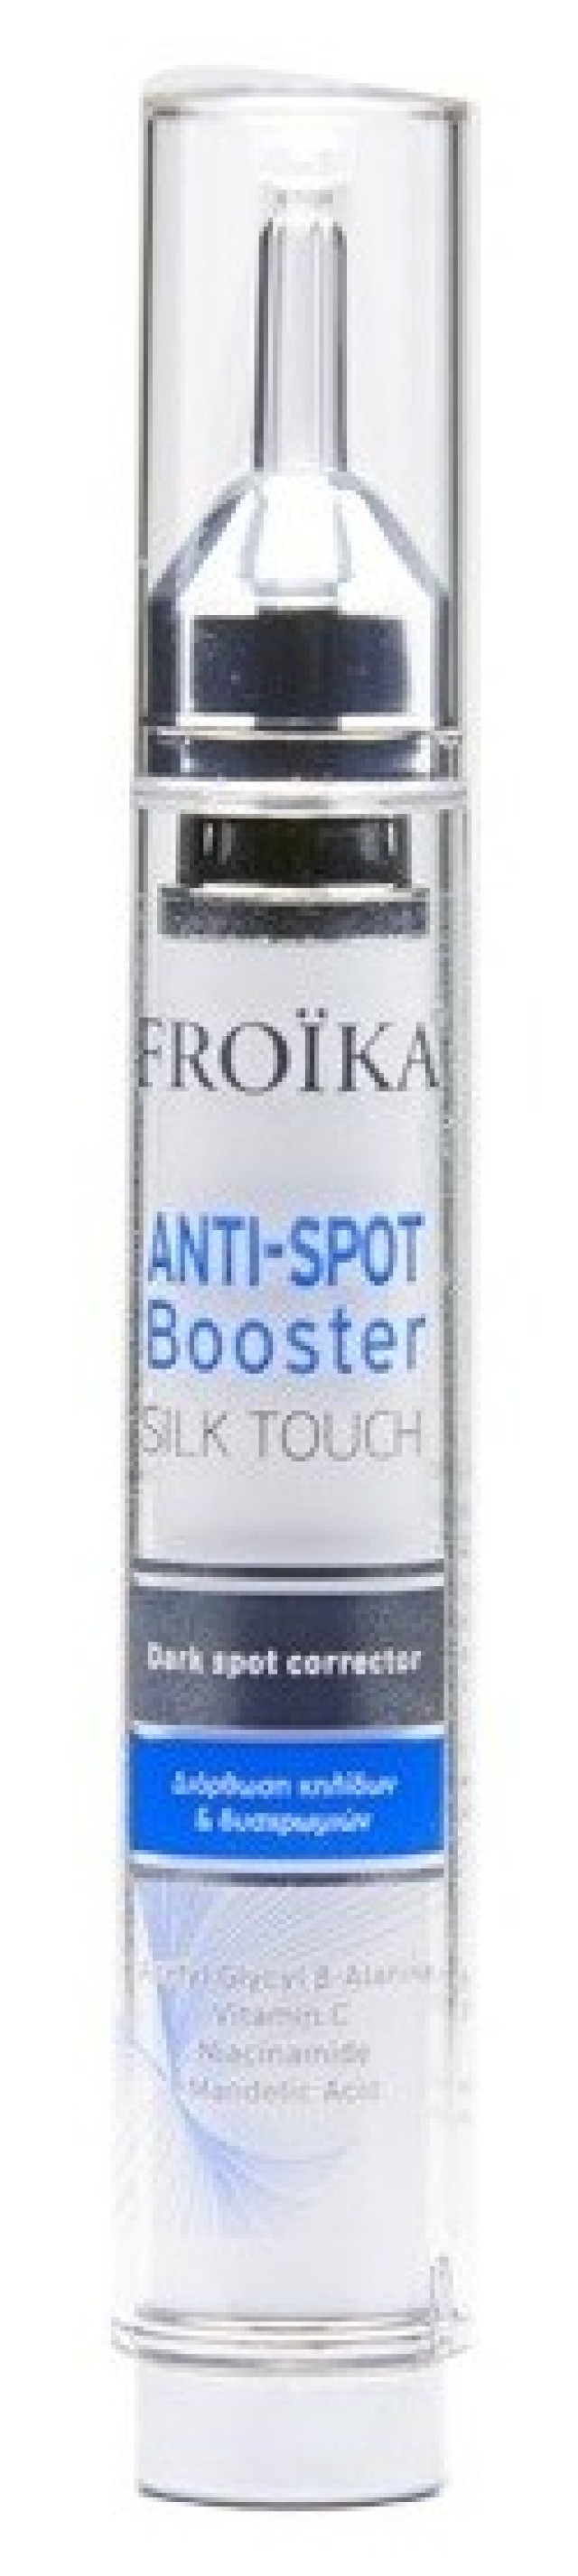 Froika Silk Touch Anti-Spot Premium Booster Διόρθωσης Κηλίδων & Δυσχρωμιών 16ml